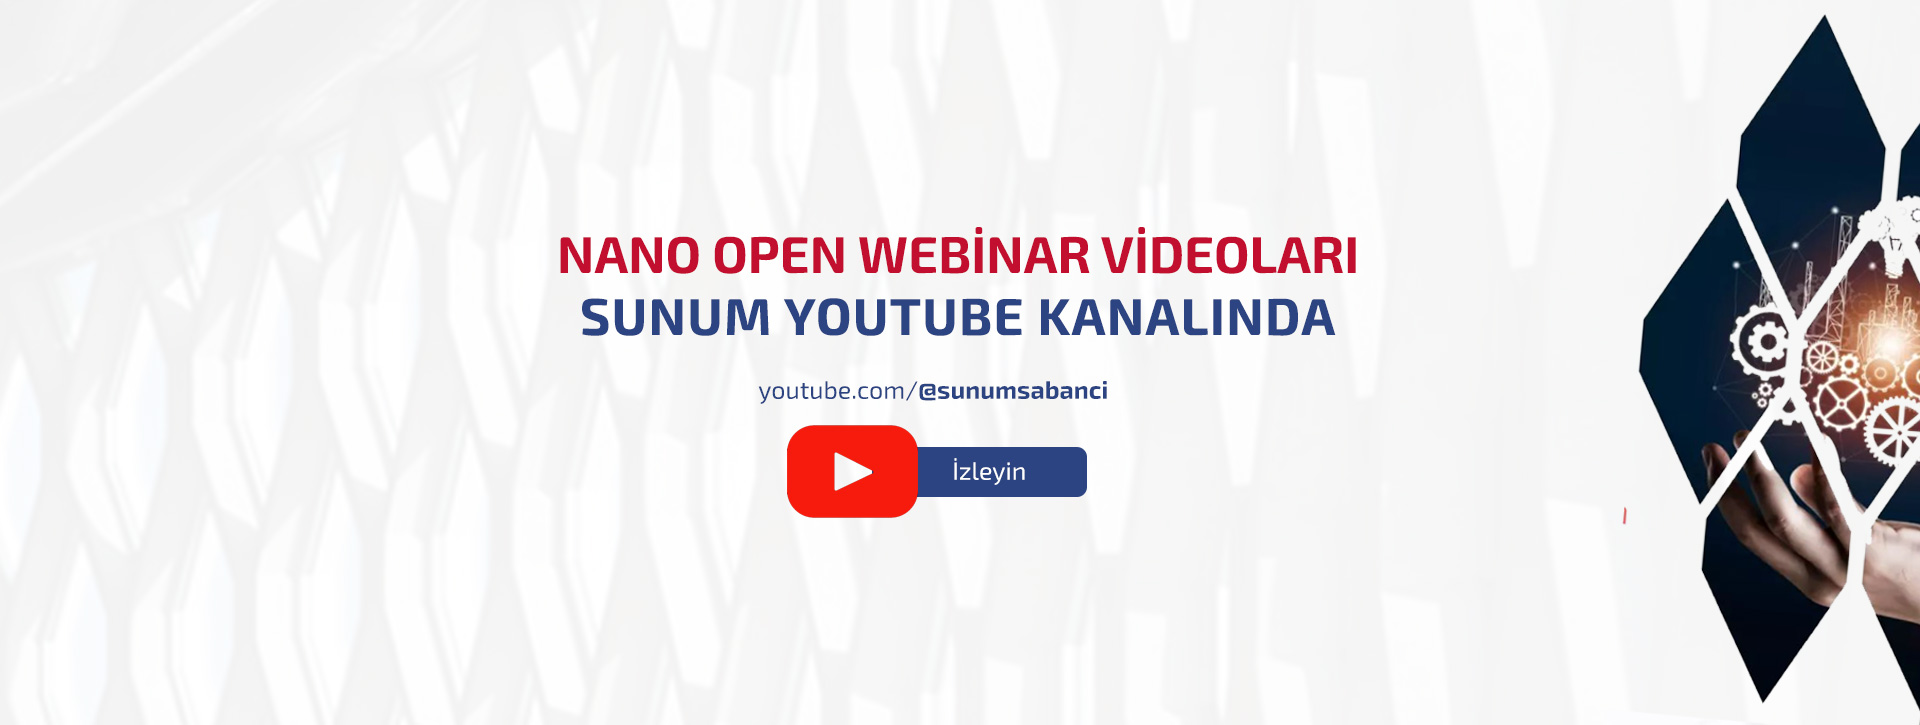 Nano Open Webinar Videoları YouTube'da Yayında